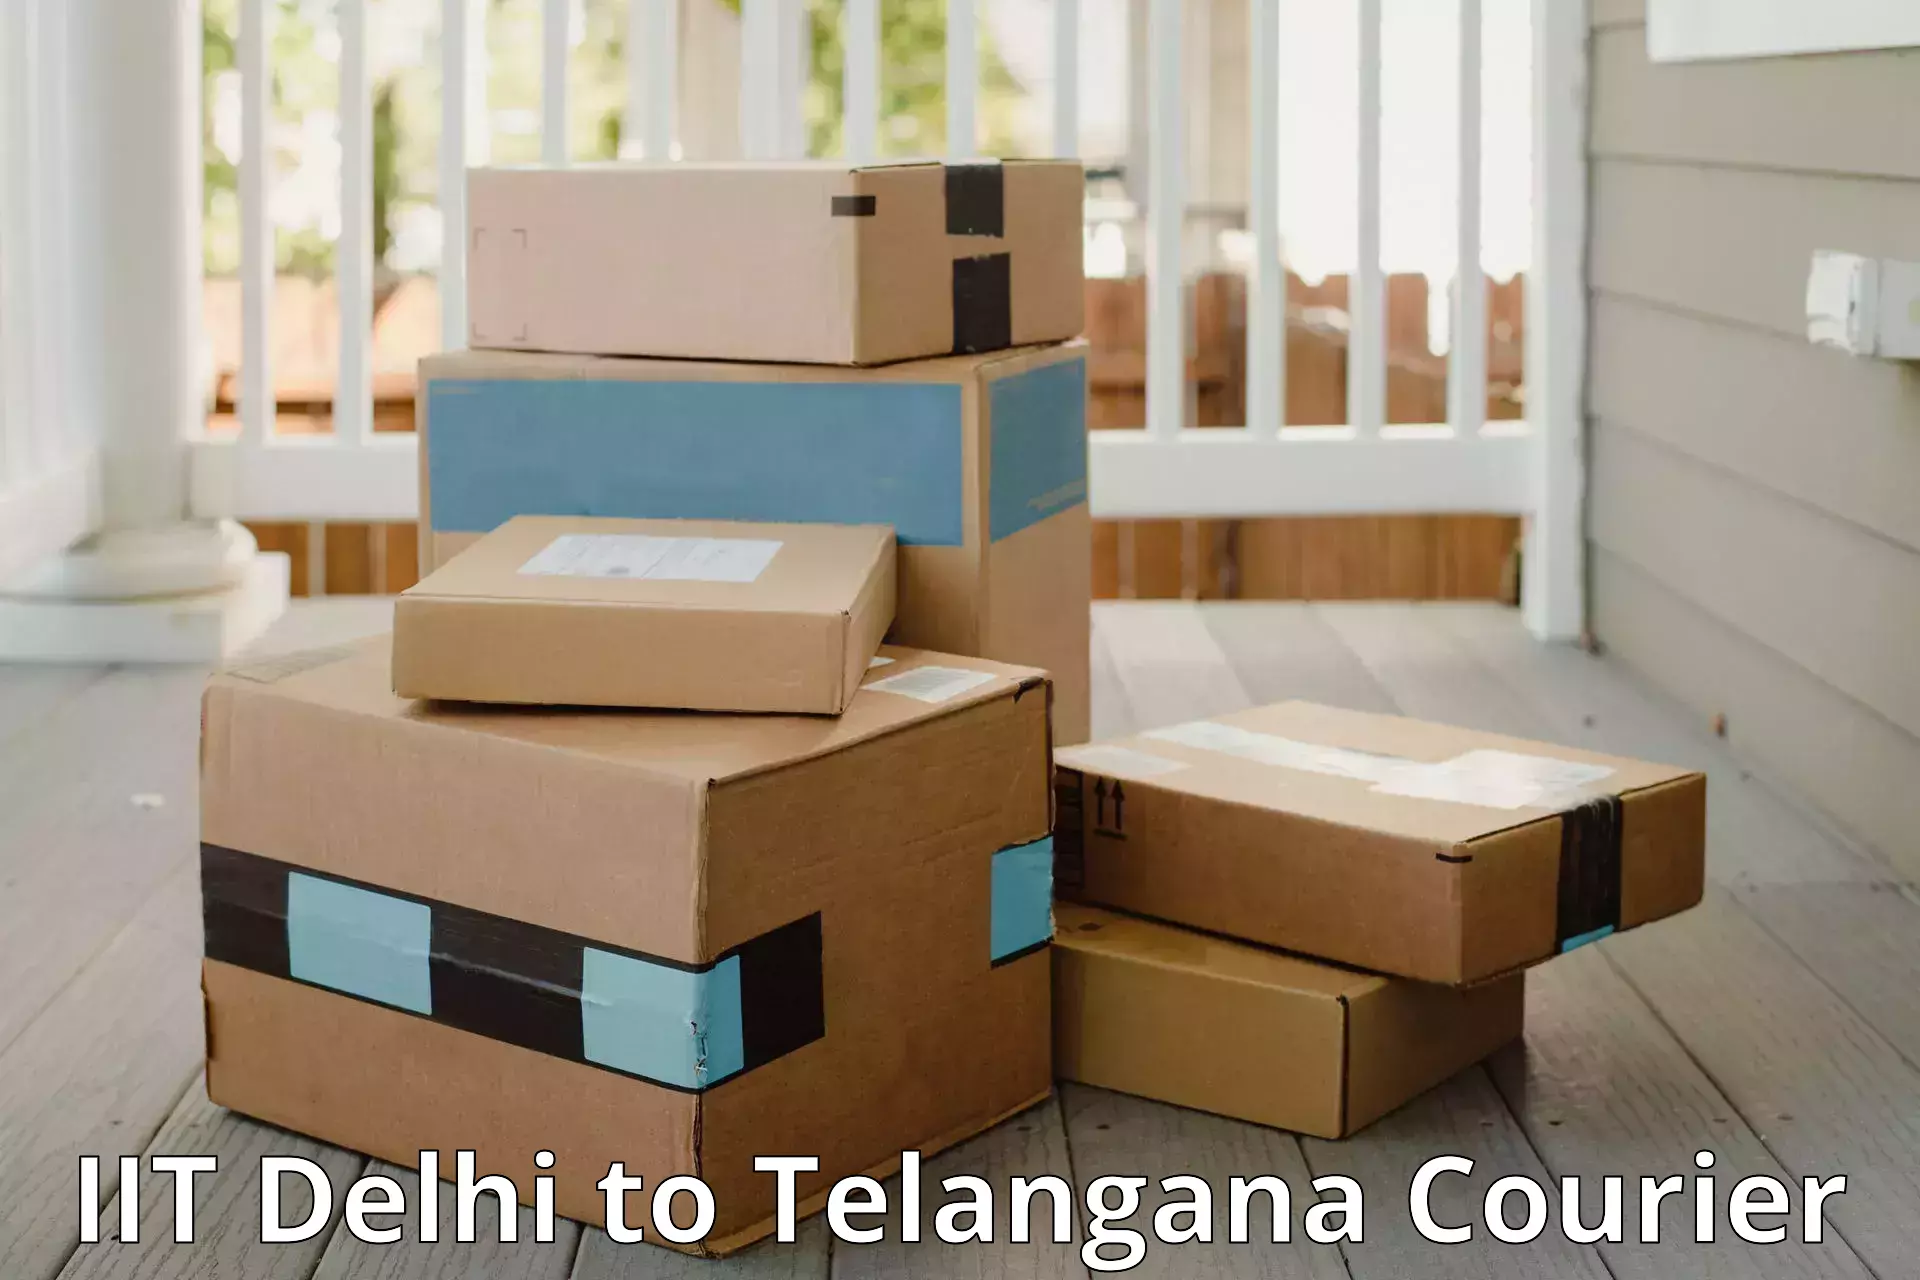 Luggage delivery app IIT Delhi to Sirikonda